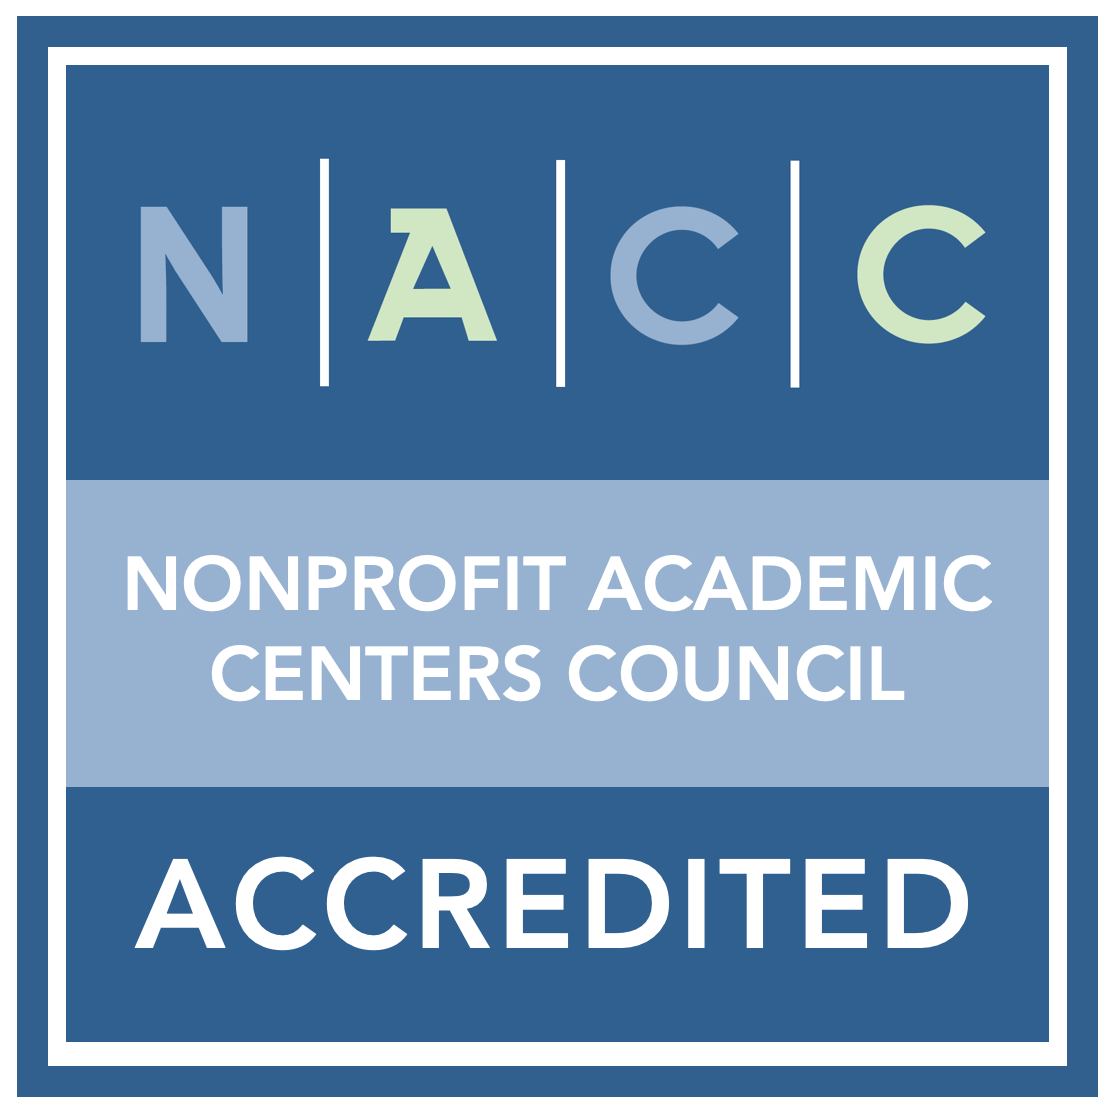 NACC | Nonprofit Academic Centers Council Accredited